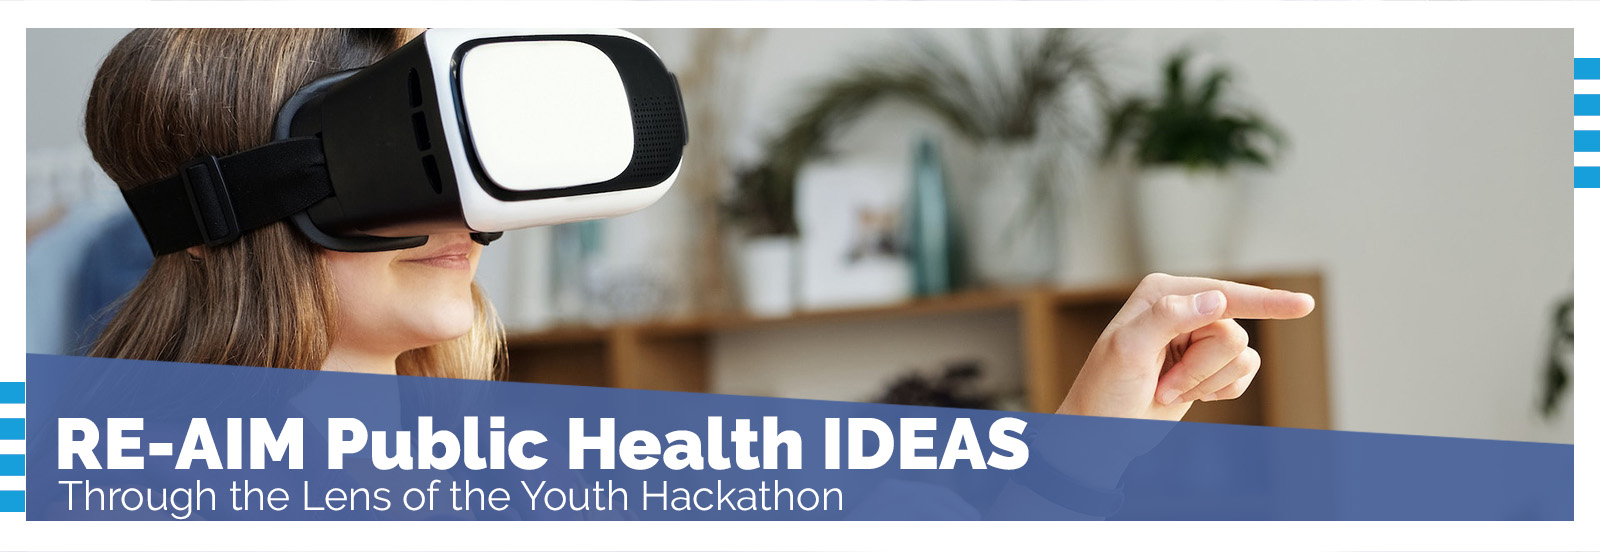 Public Health IDEAS through the Lens of the Youth Hackathon